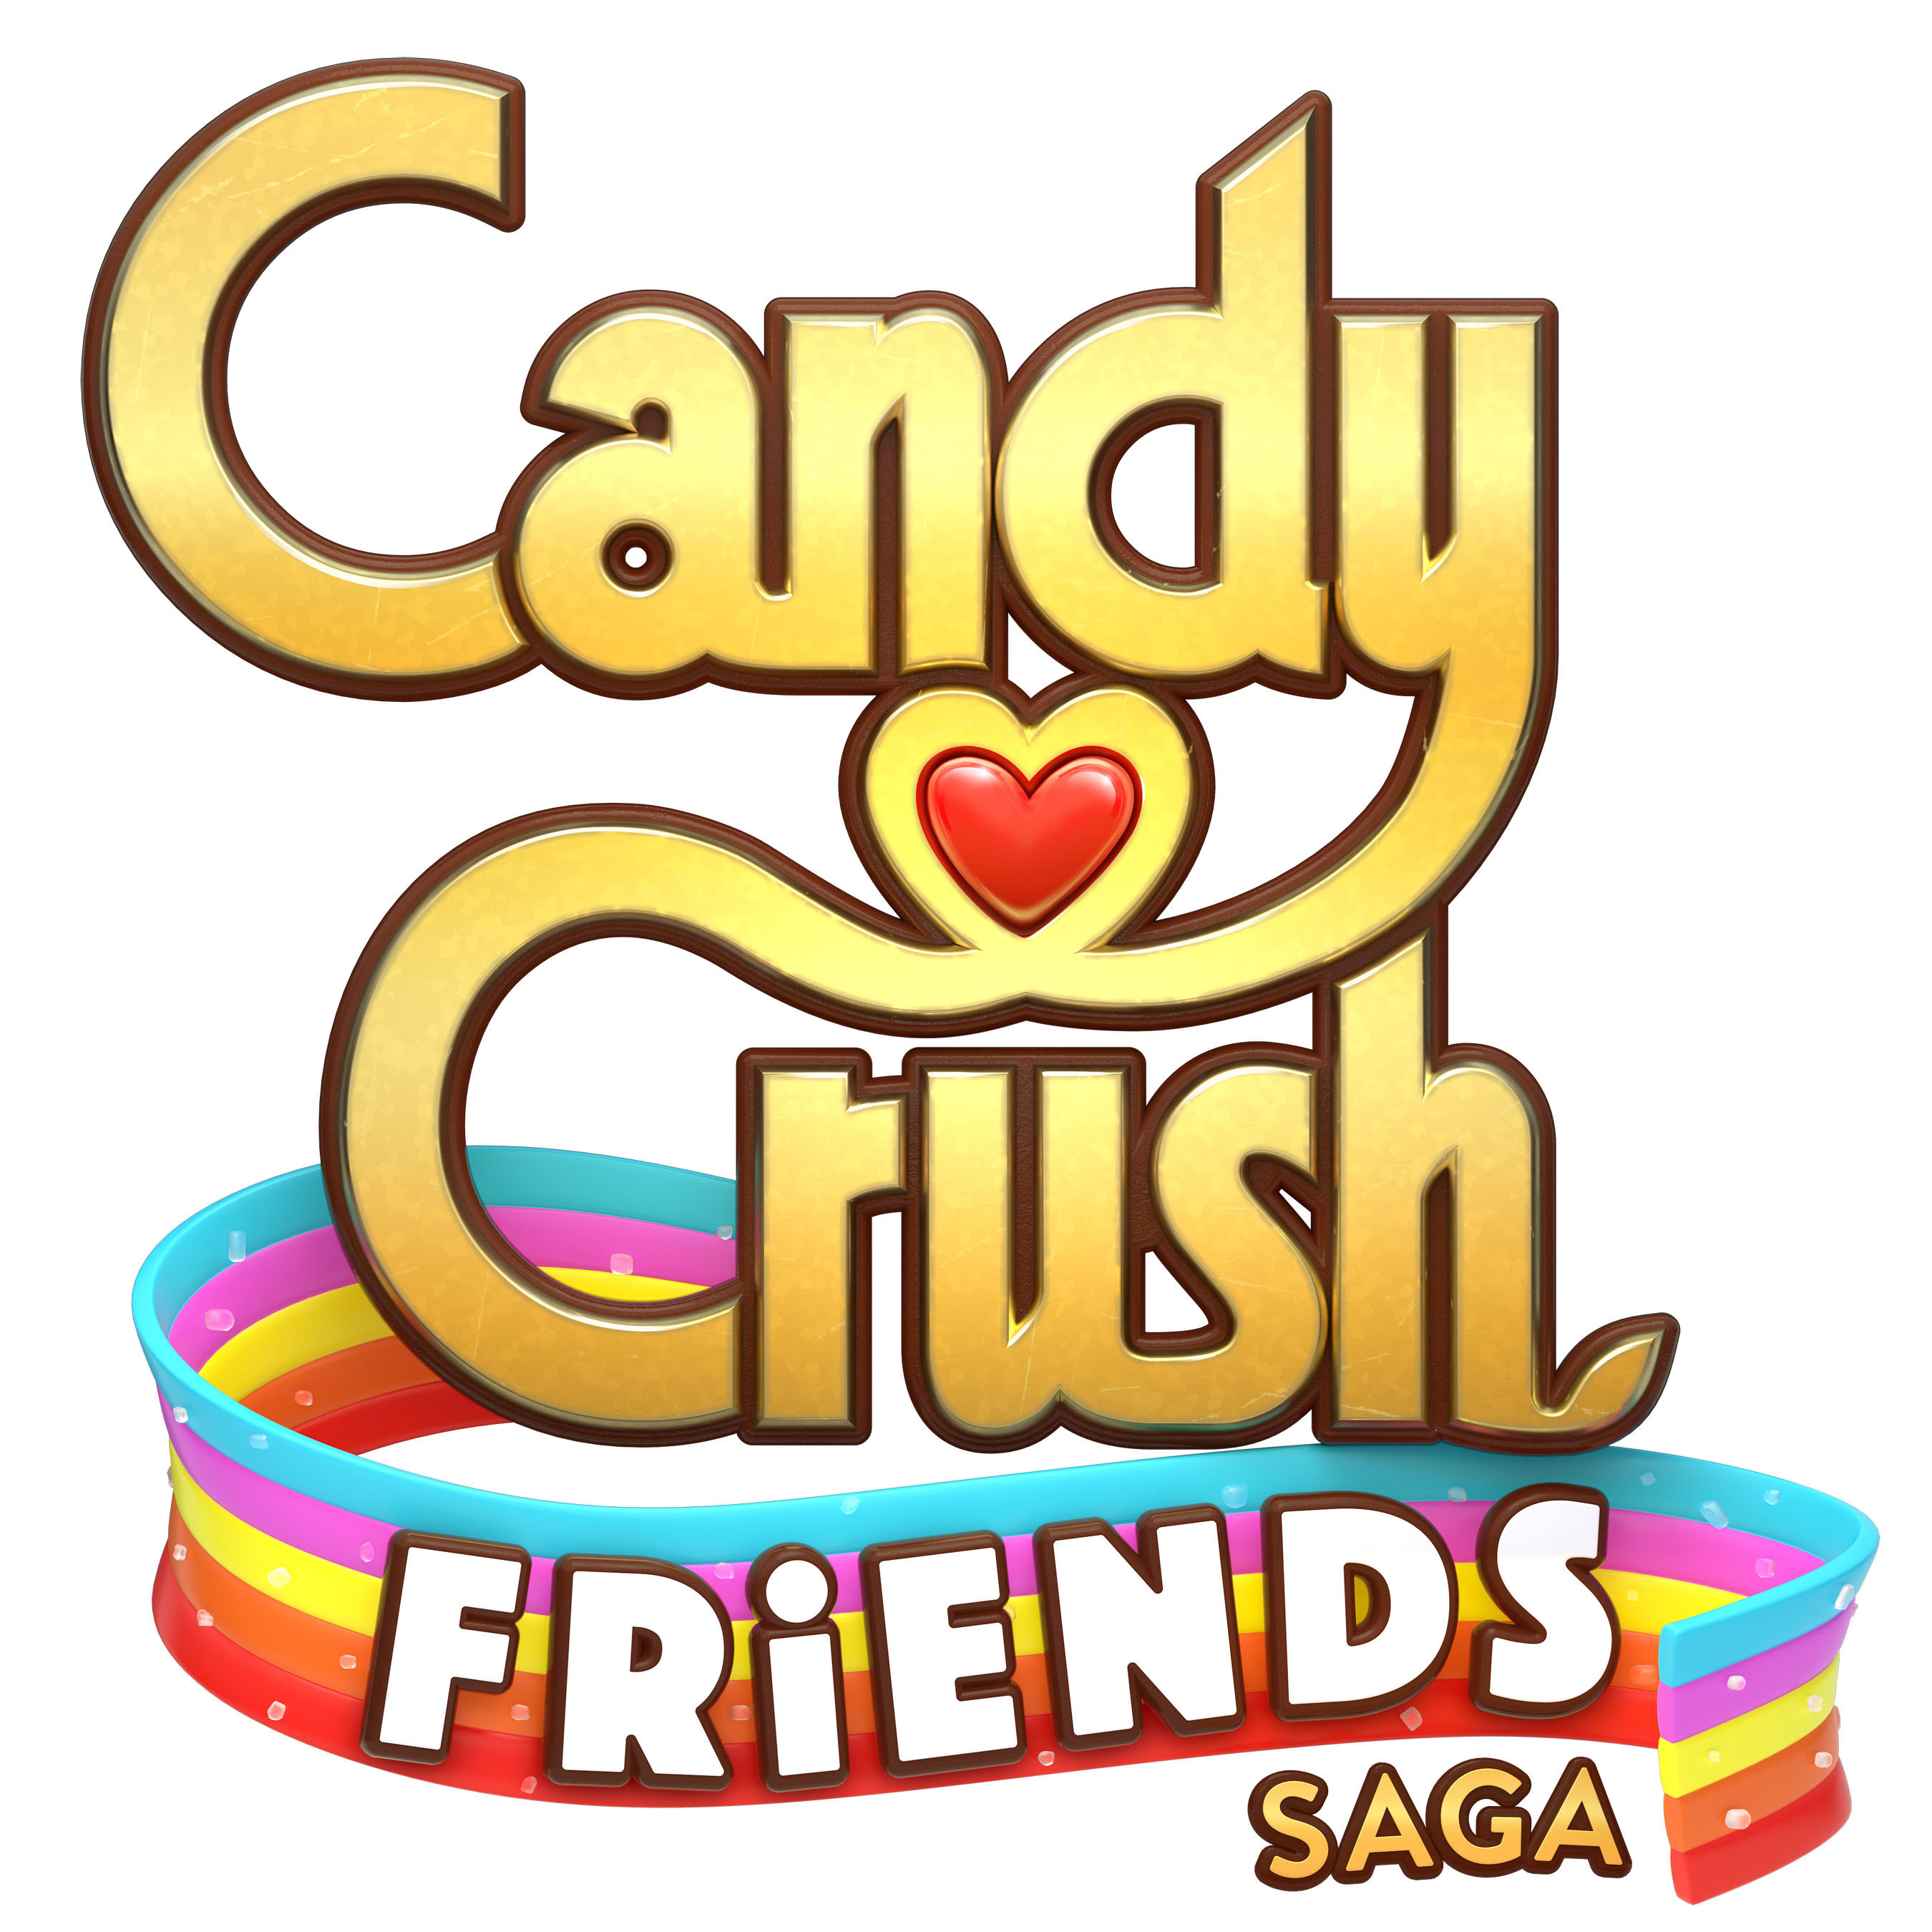 Candy Crush Friends Saga on Behance